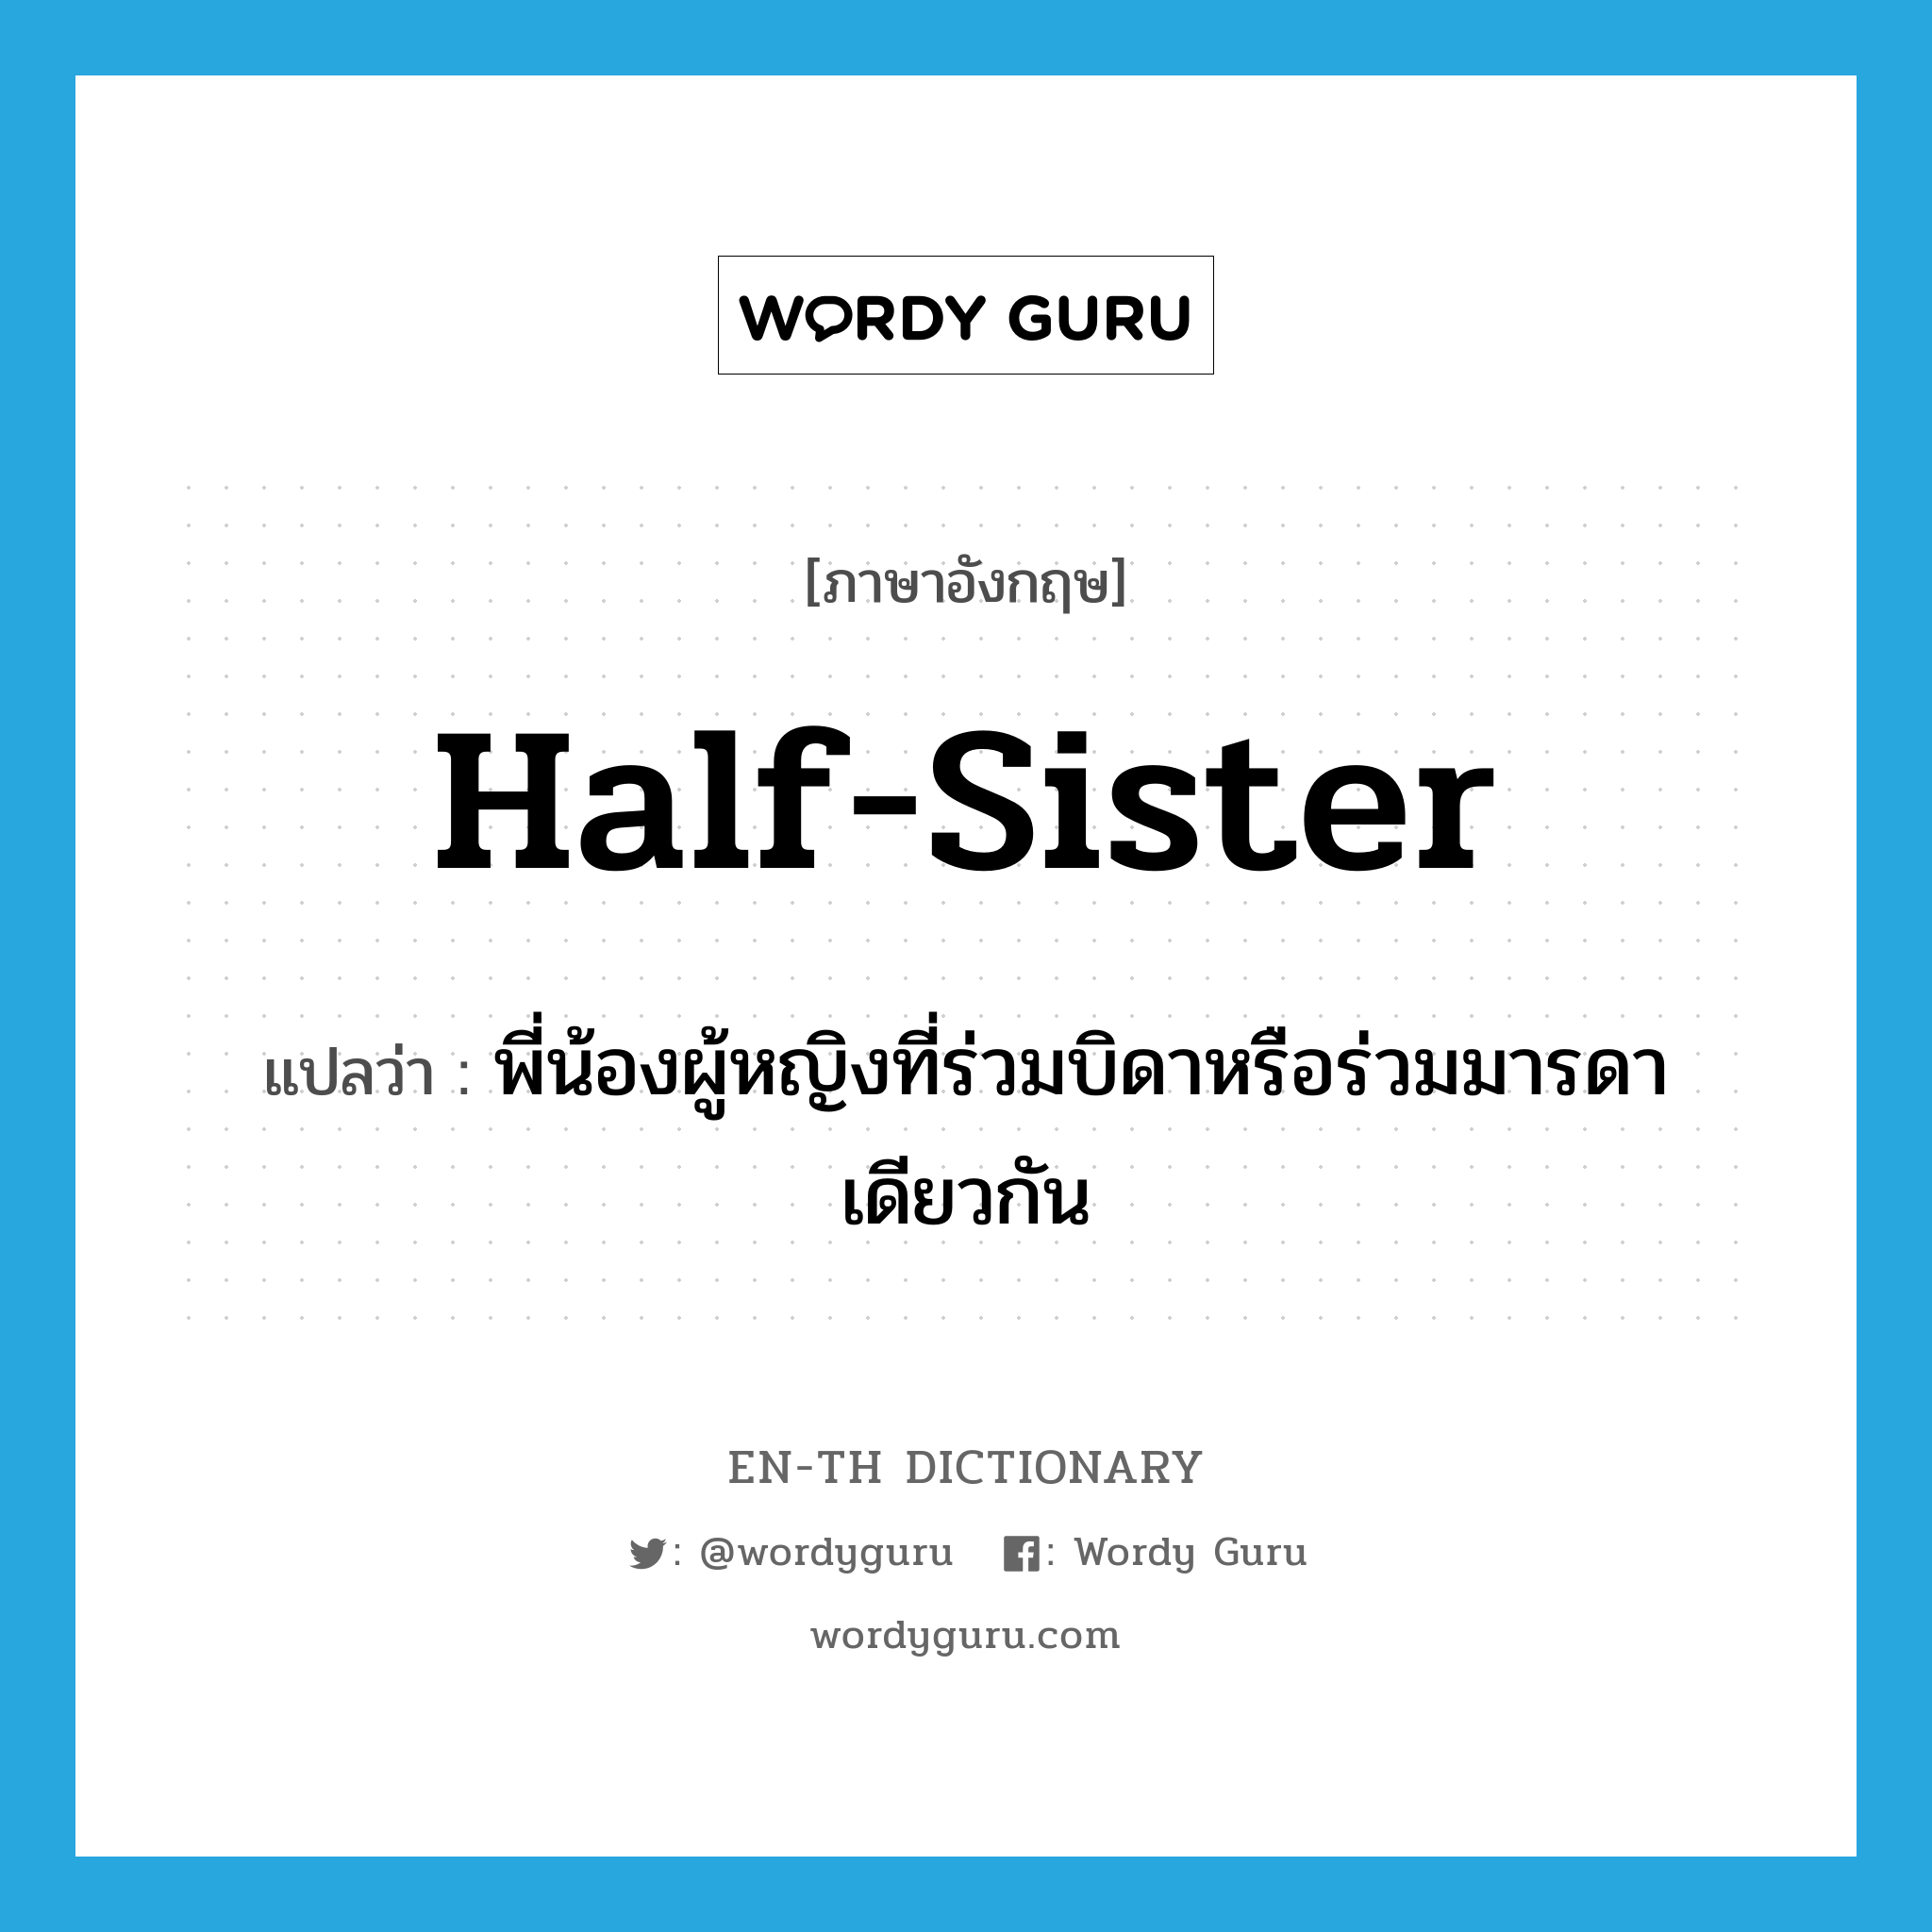 half-sister